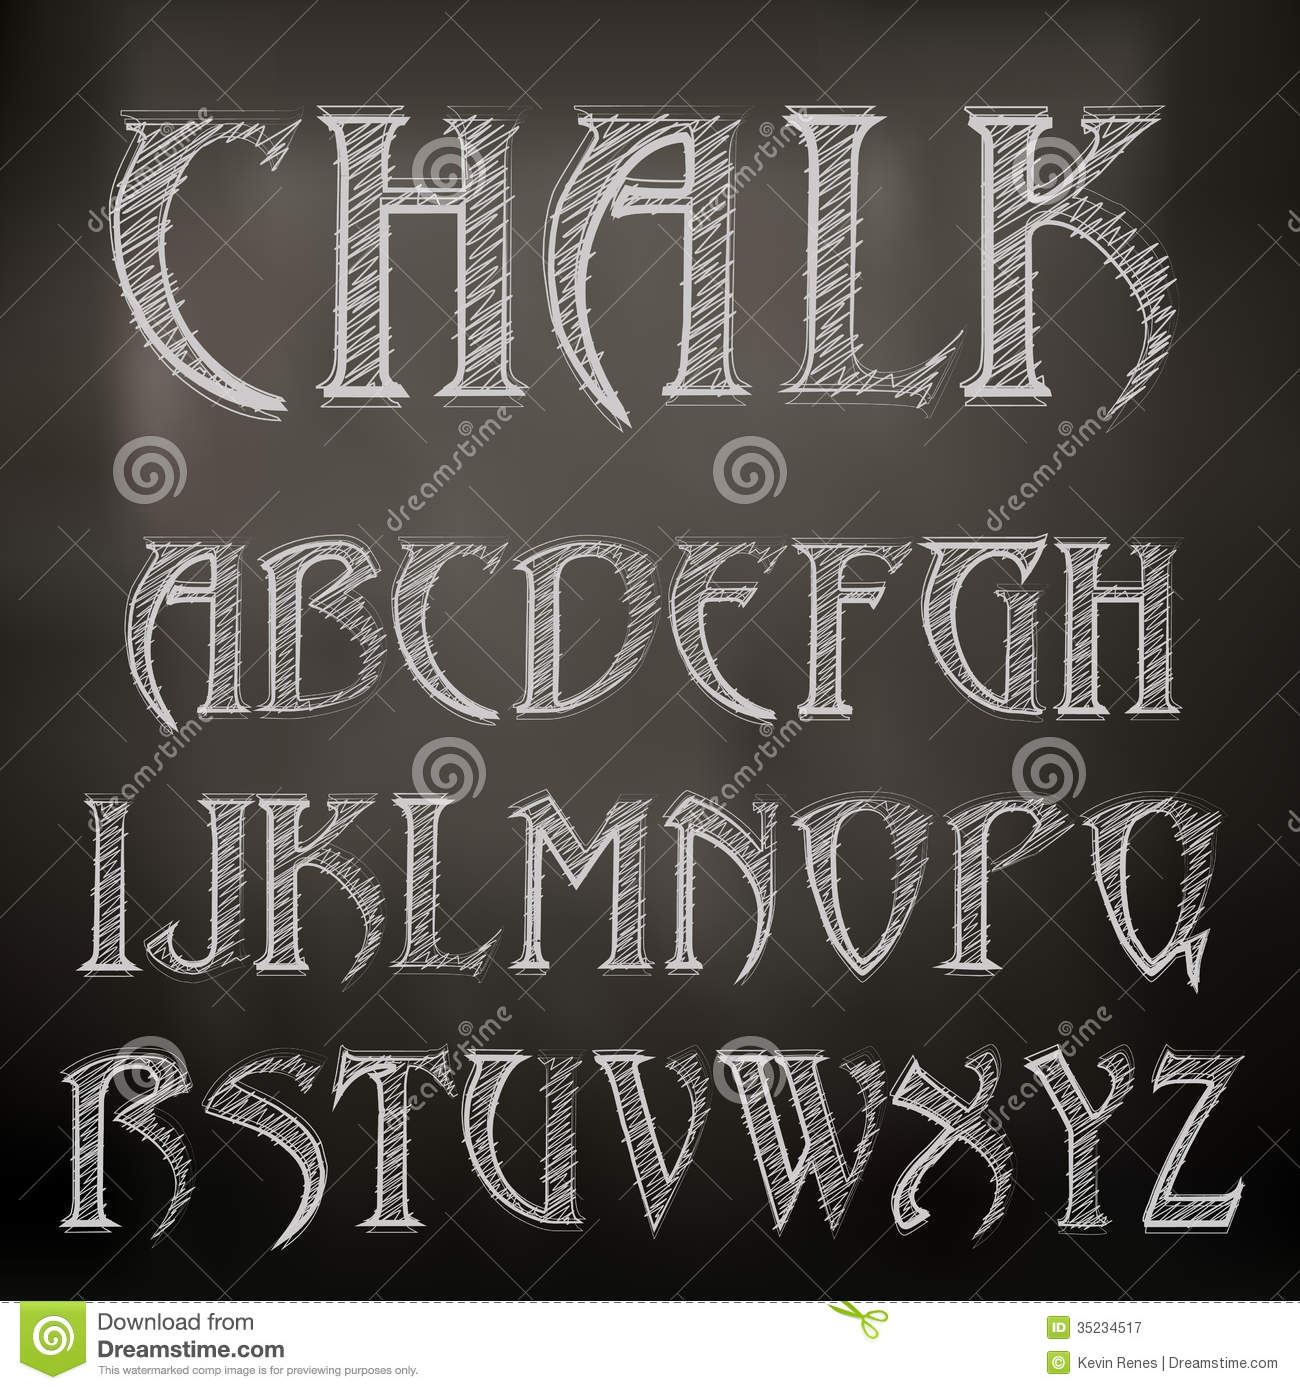 Chalkboard Font Alphabet